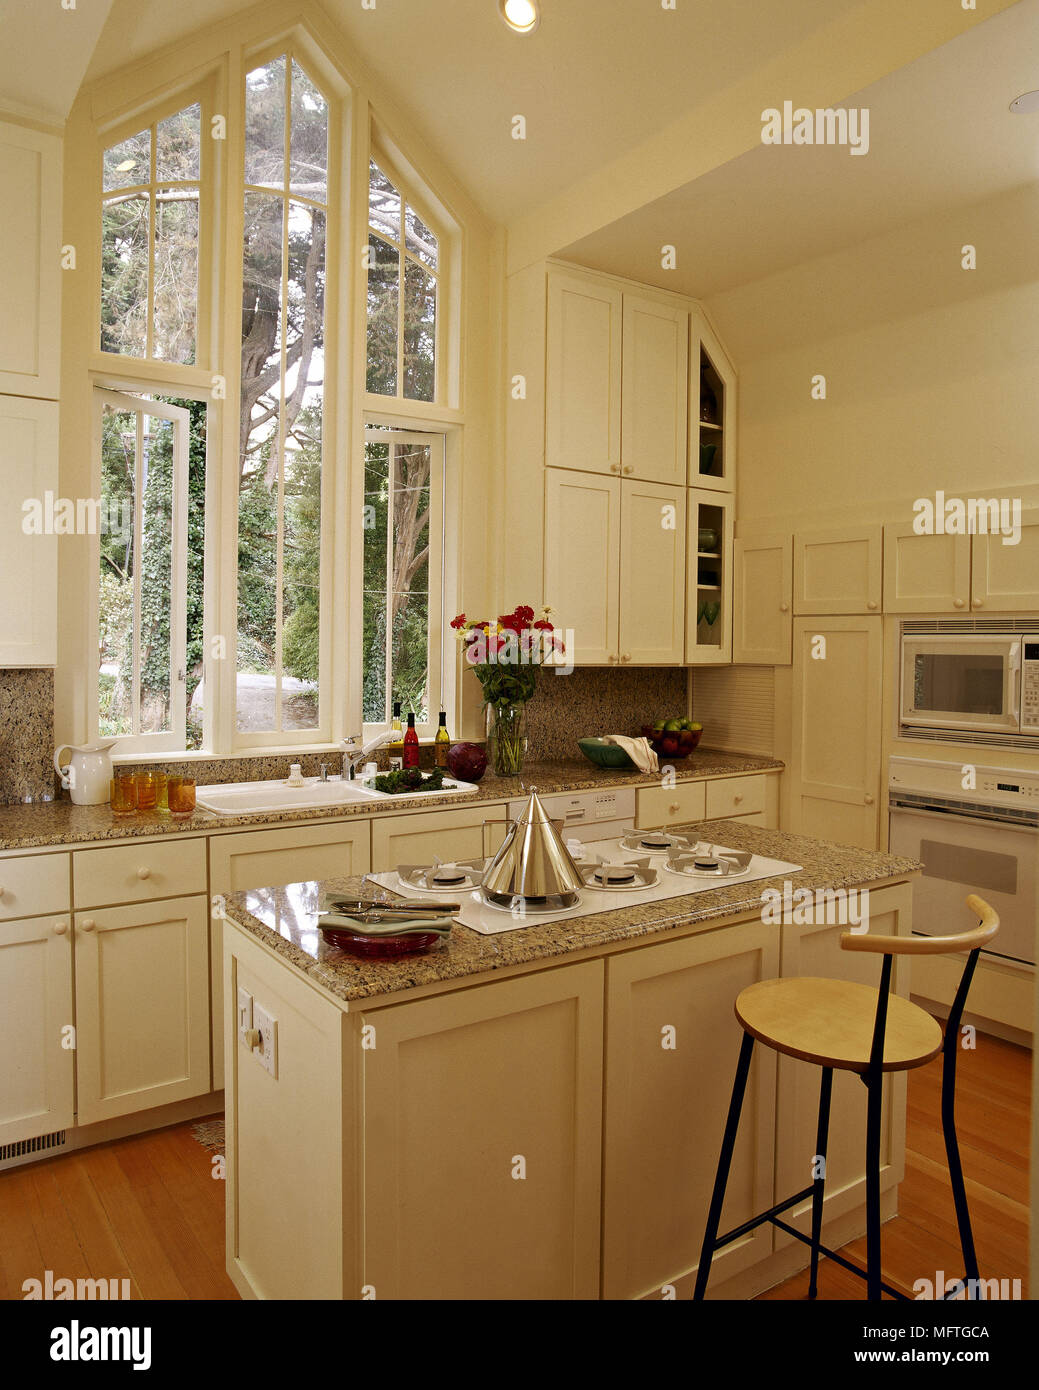 https://c8.alamy.com/comp/MFTGCA/modern-white-kitchen-with-breakfast-bar-and-gothic-style-window-MFTGCA.jpg